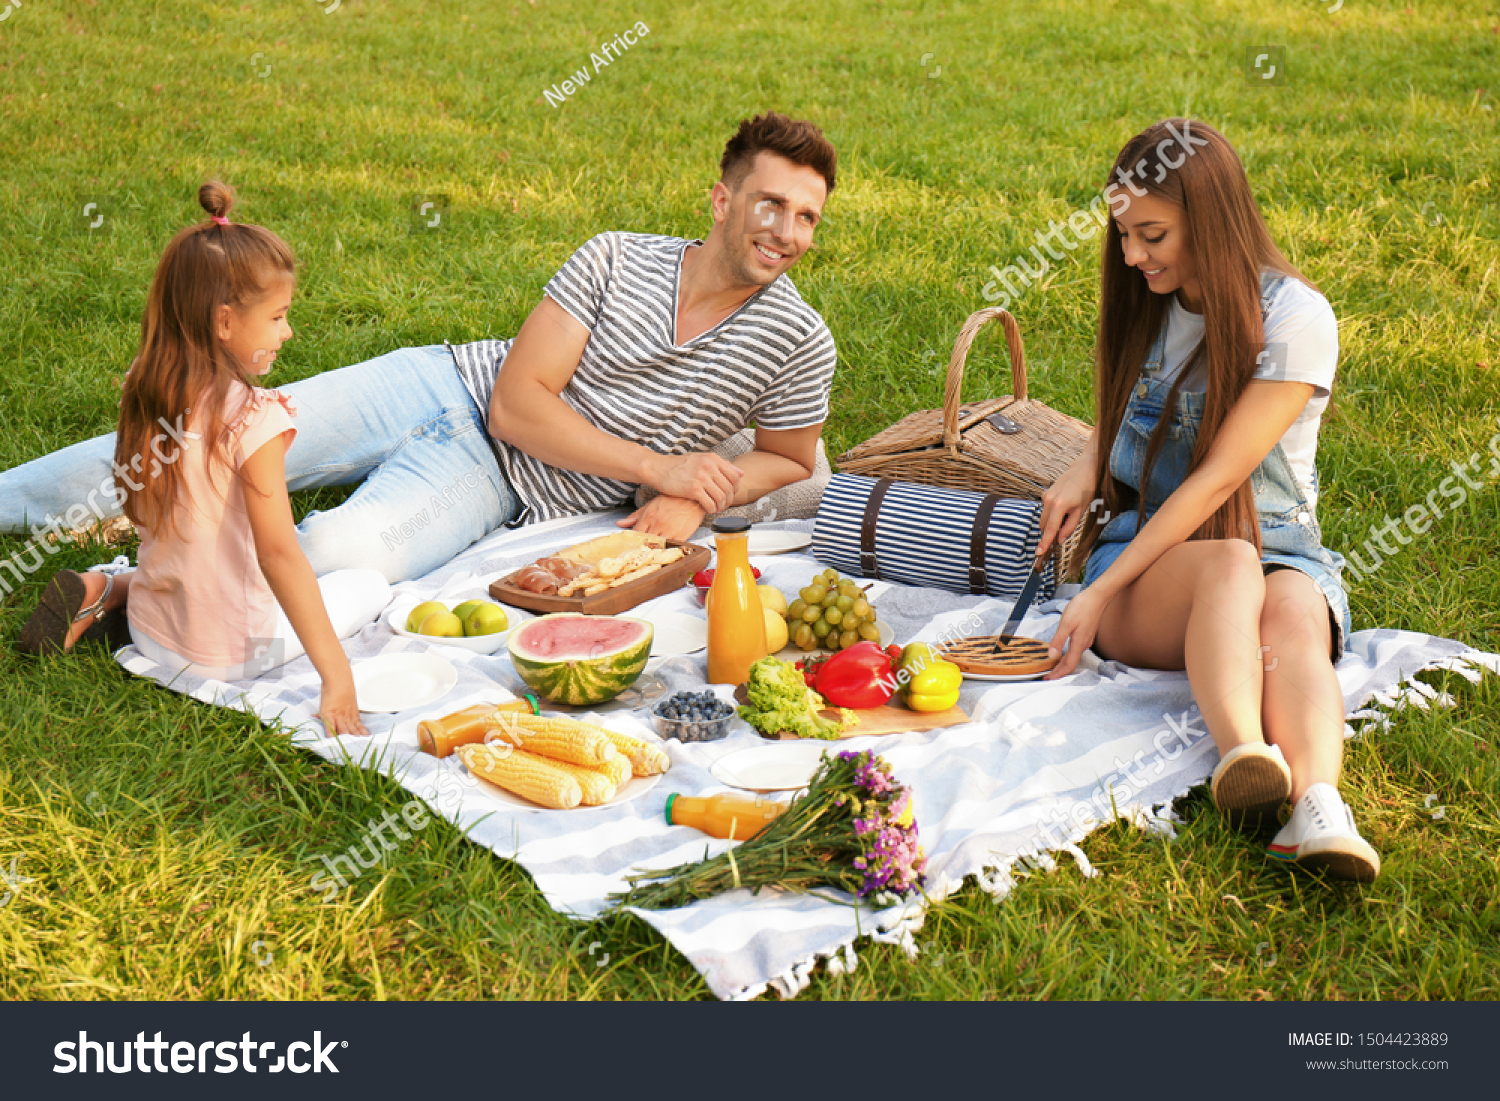 Жена на пикнике сняла всю одежду фото